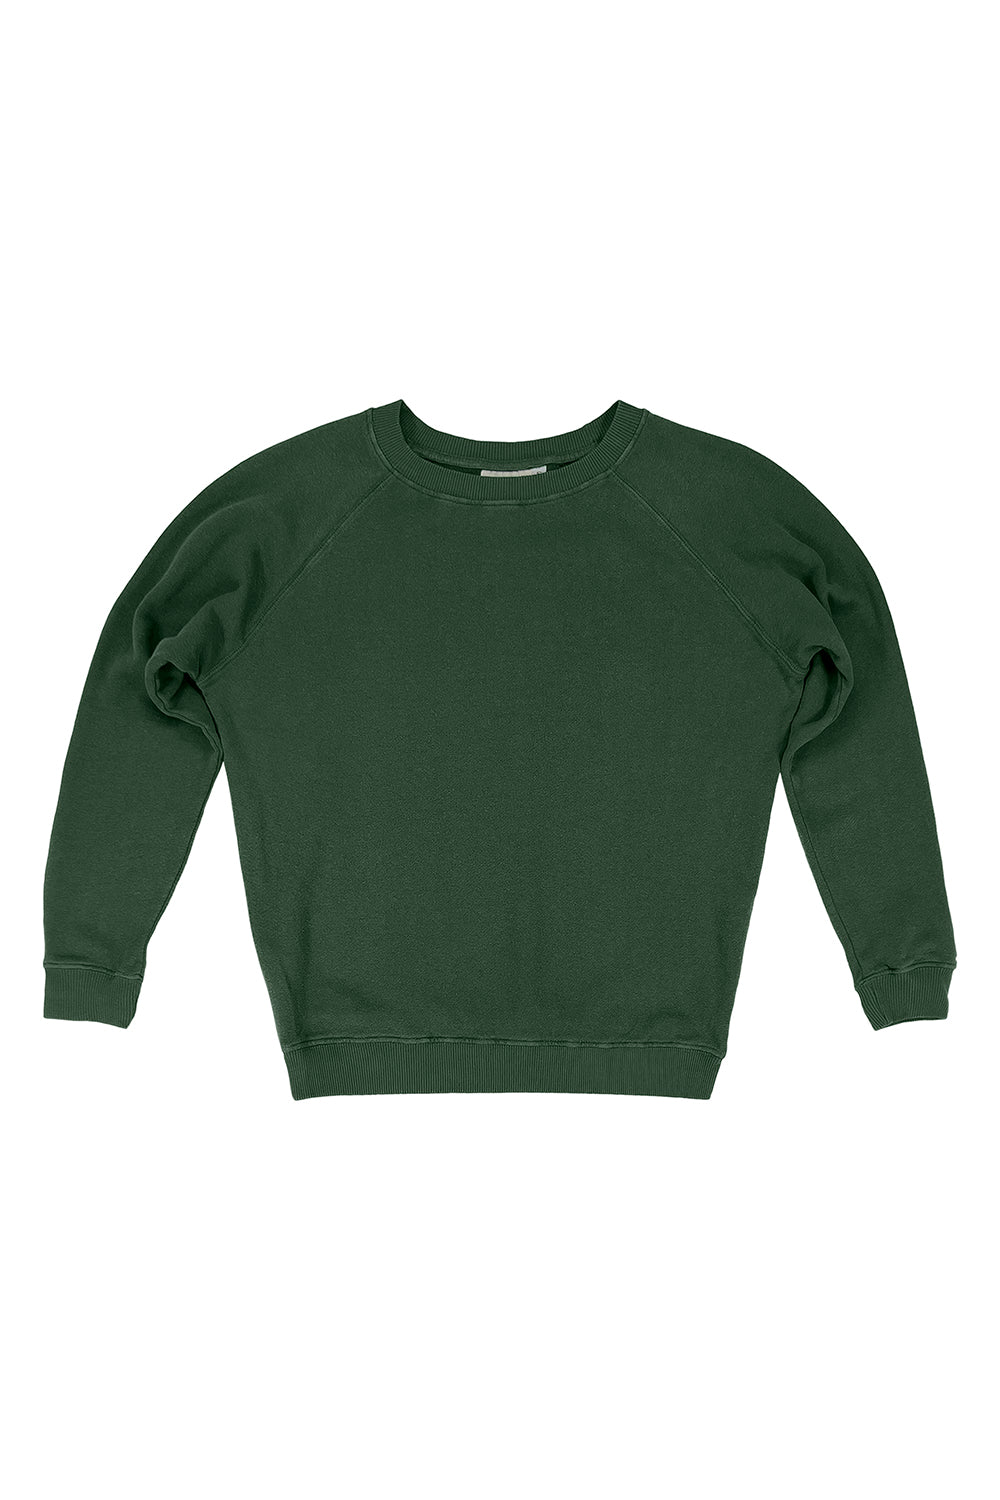 Bonfire Raglan Sweatshirt | Jungmaven Hemp Clothing & Accessories / Color: Hunter Green